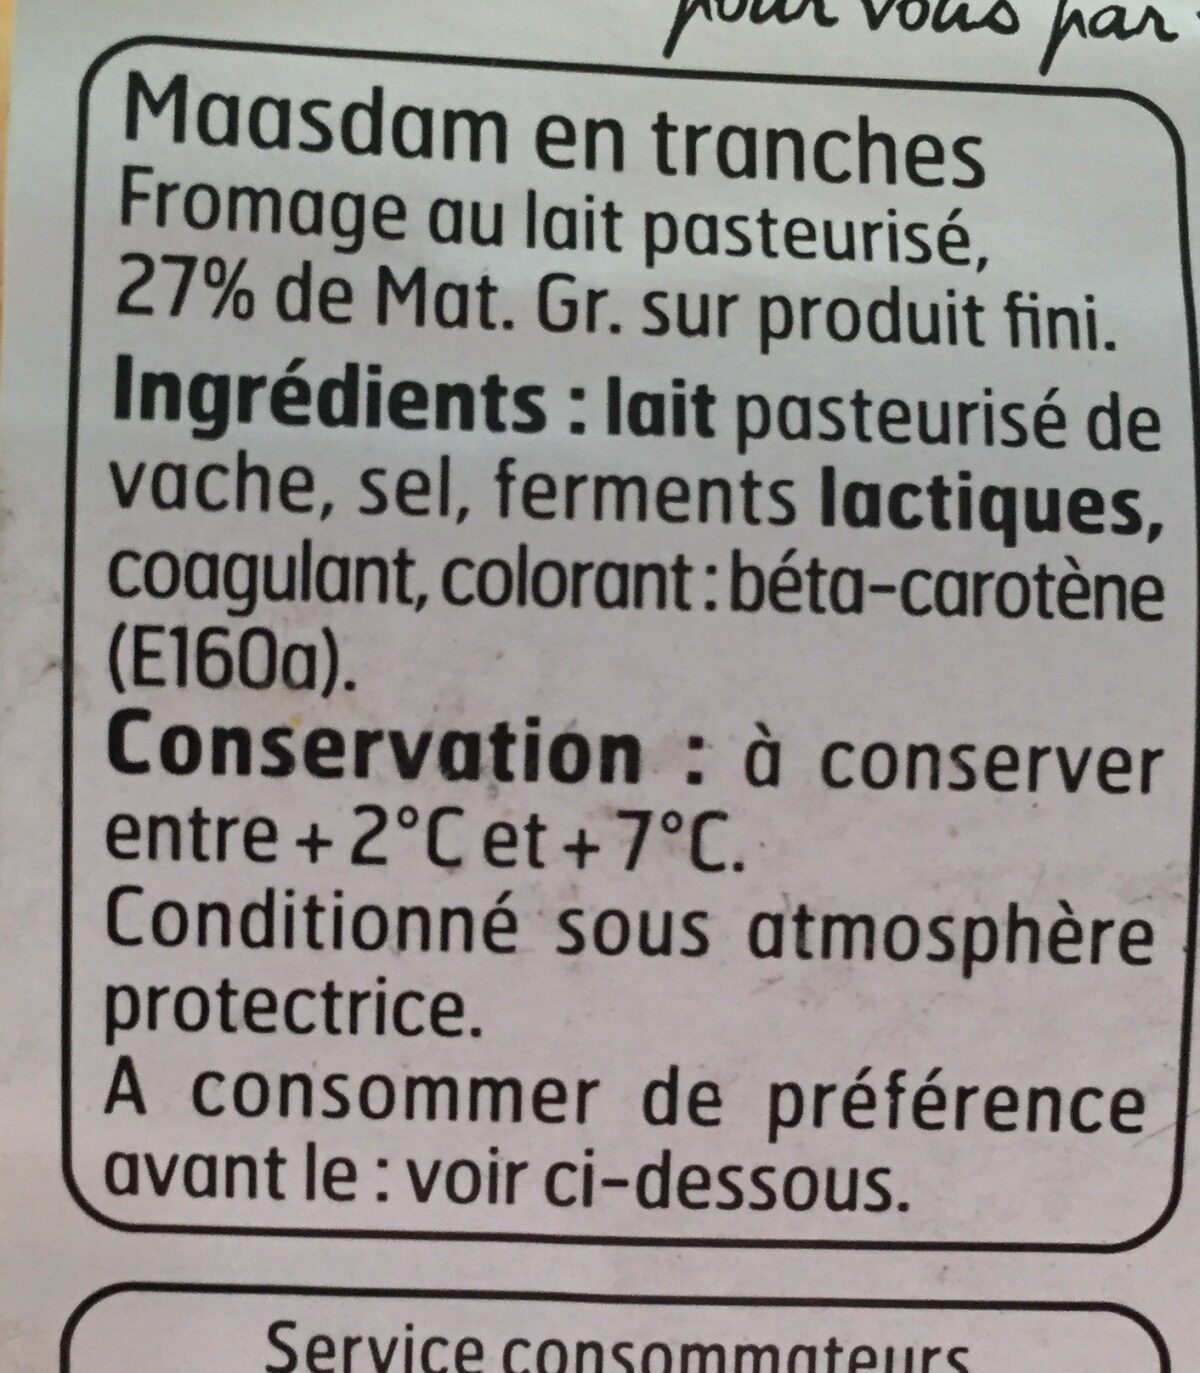 Maasdam en tranches - Ingredients - fr